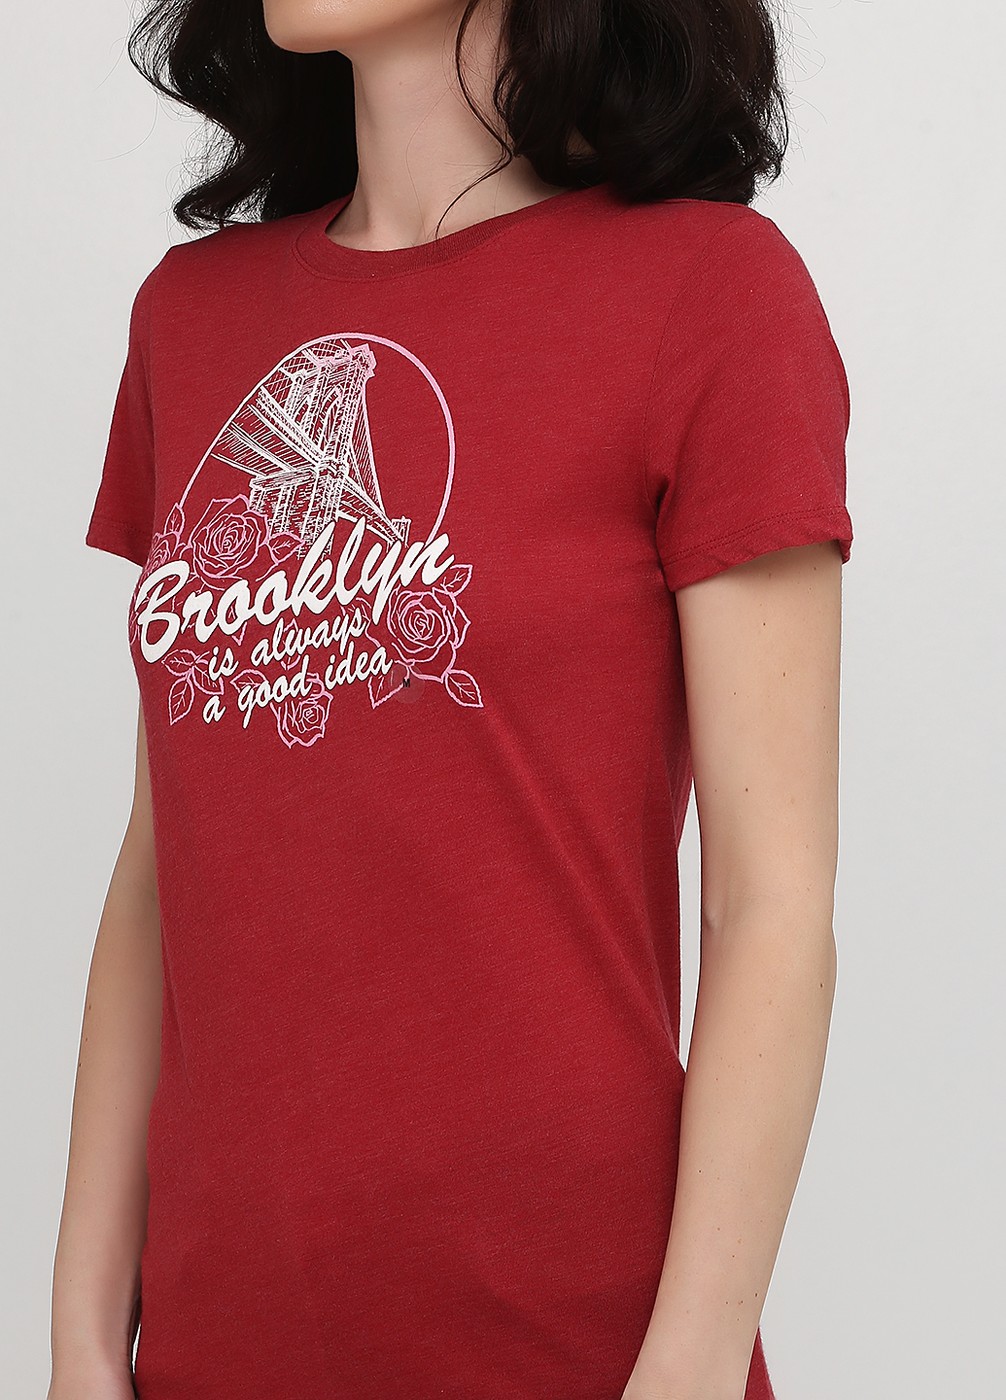 Красная футболка - женская футболка Aeropostale